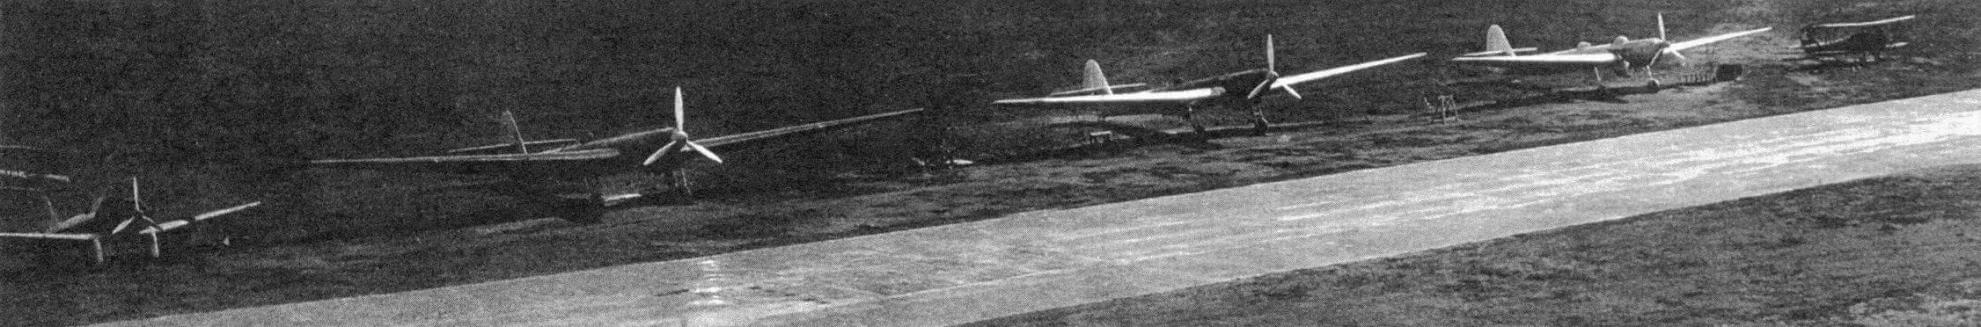 БОК-7 (справа) и два БОК-15 на аэродроме ЛИИ НКАП